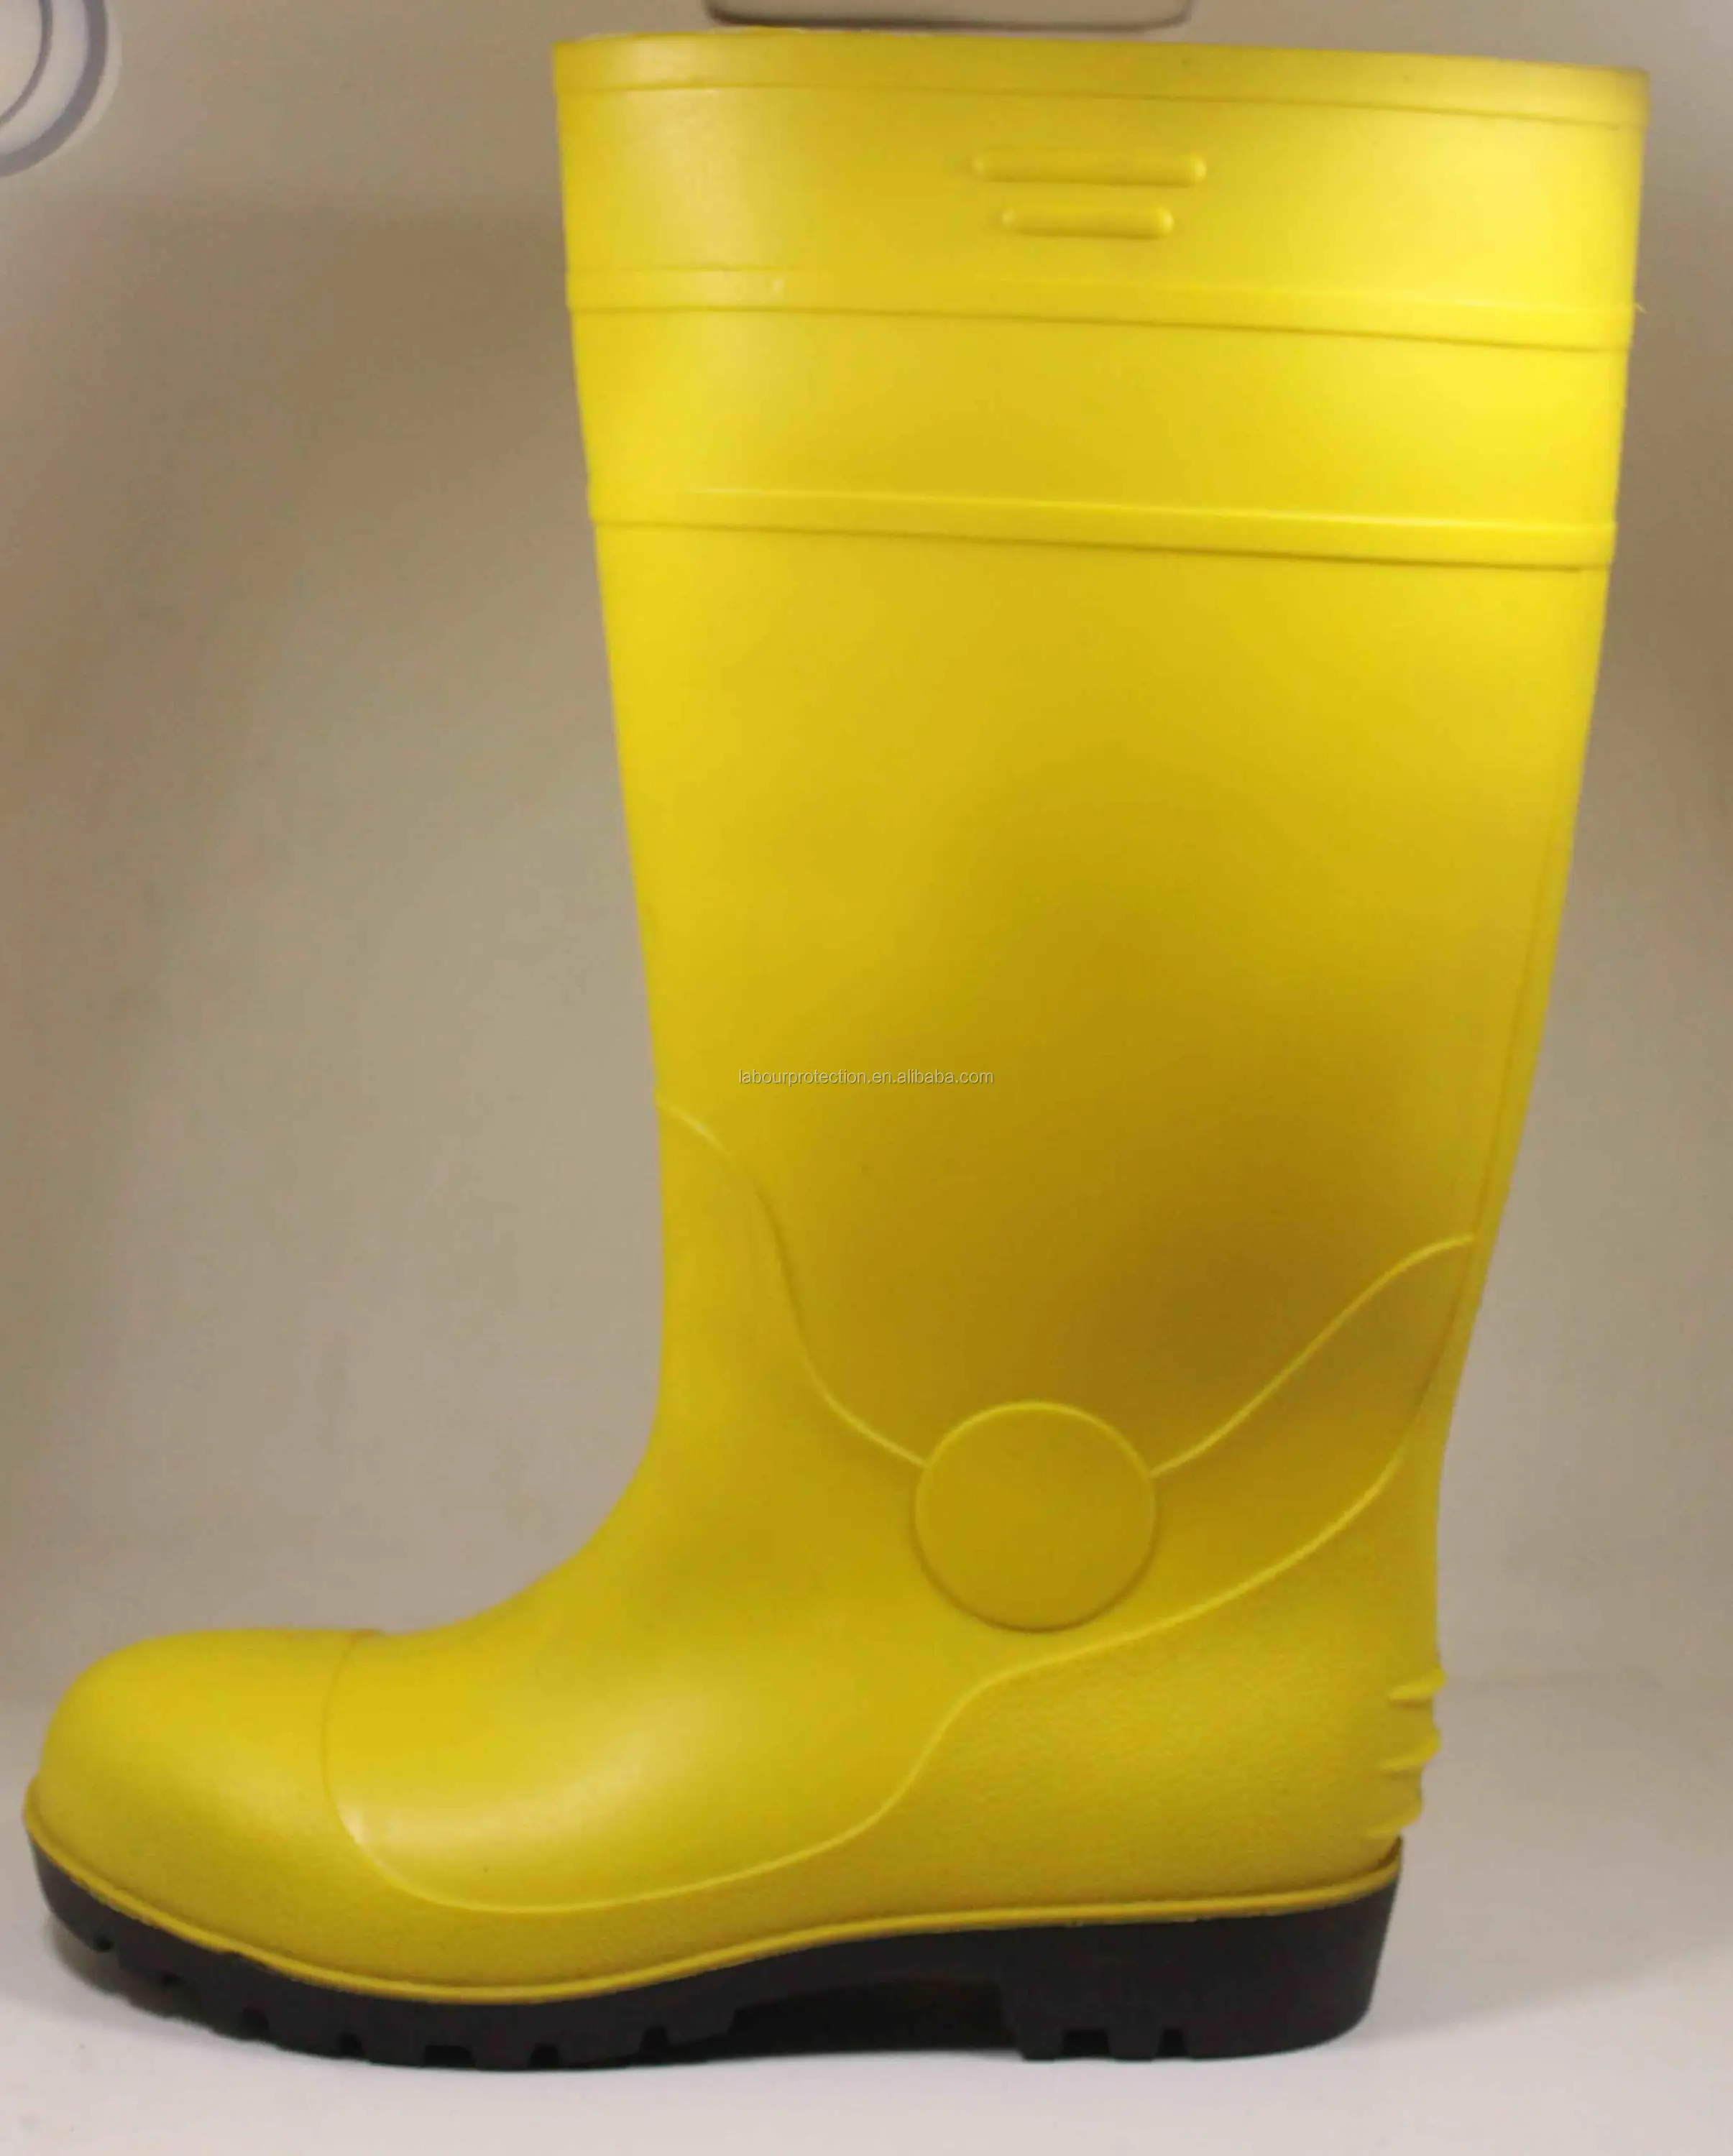 Cheap Pvc Waterproof Safety Rain Boots - Buy Rain Boots,Pvc Waterproof ...